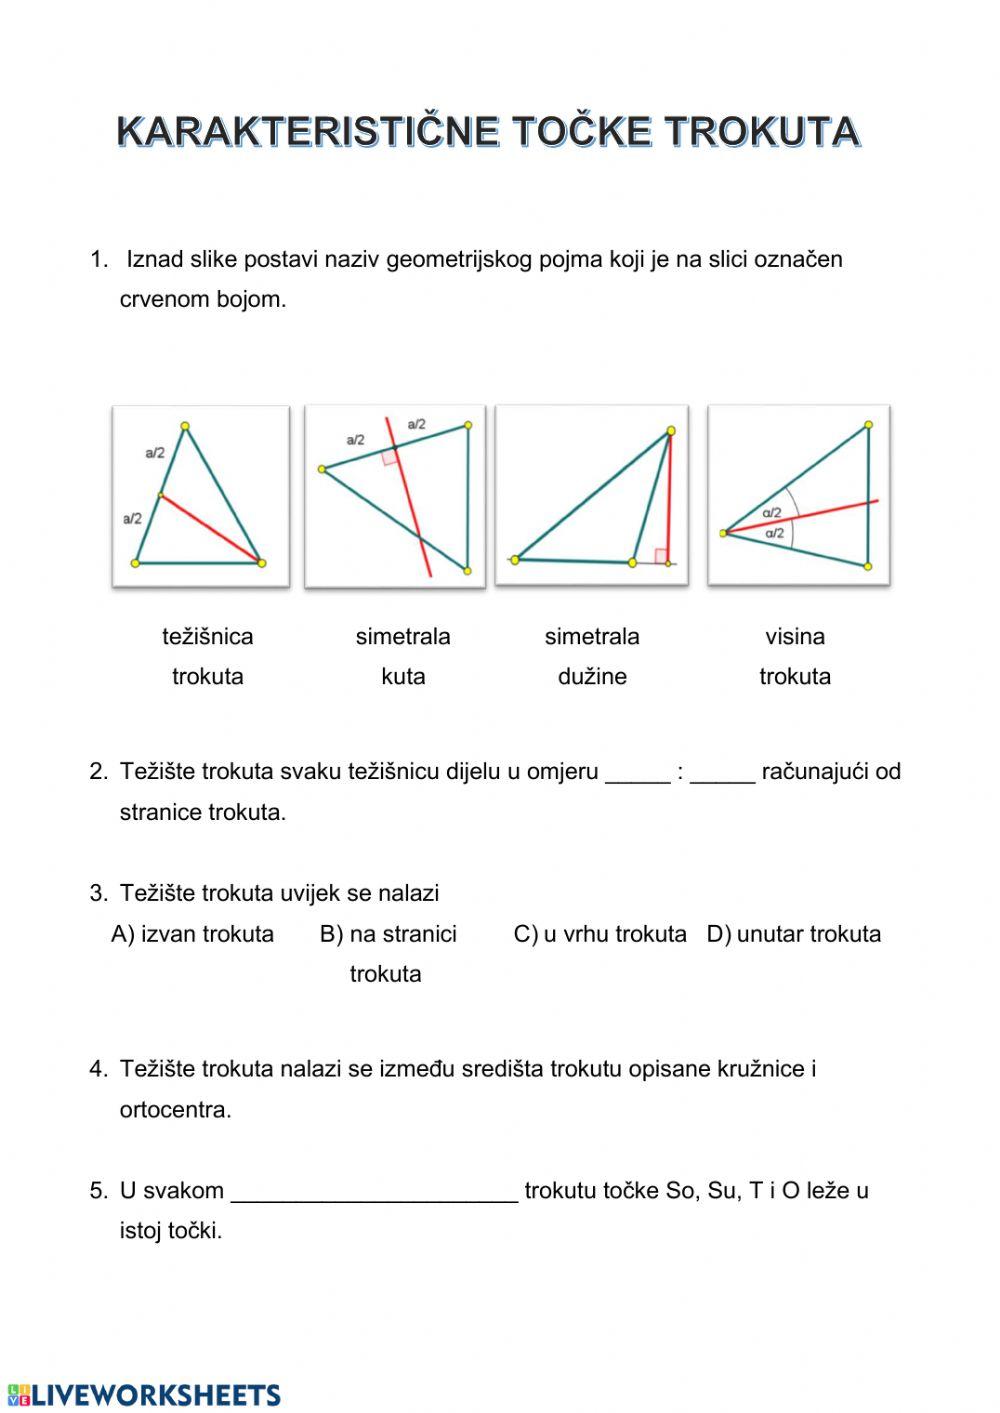 Karakteristične točke trokuta i Eulerov pravac - NL